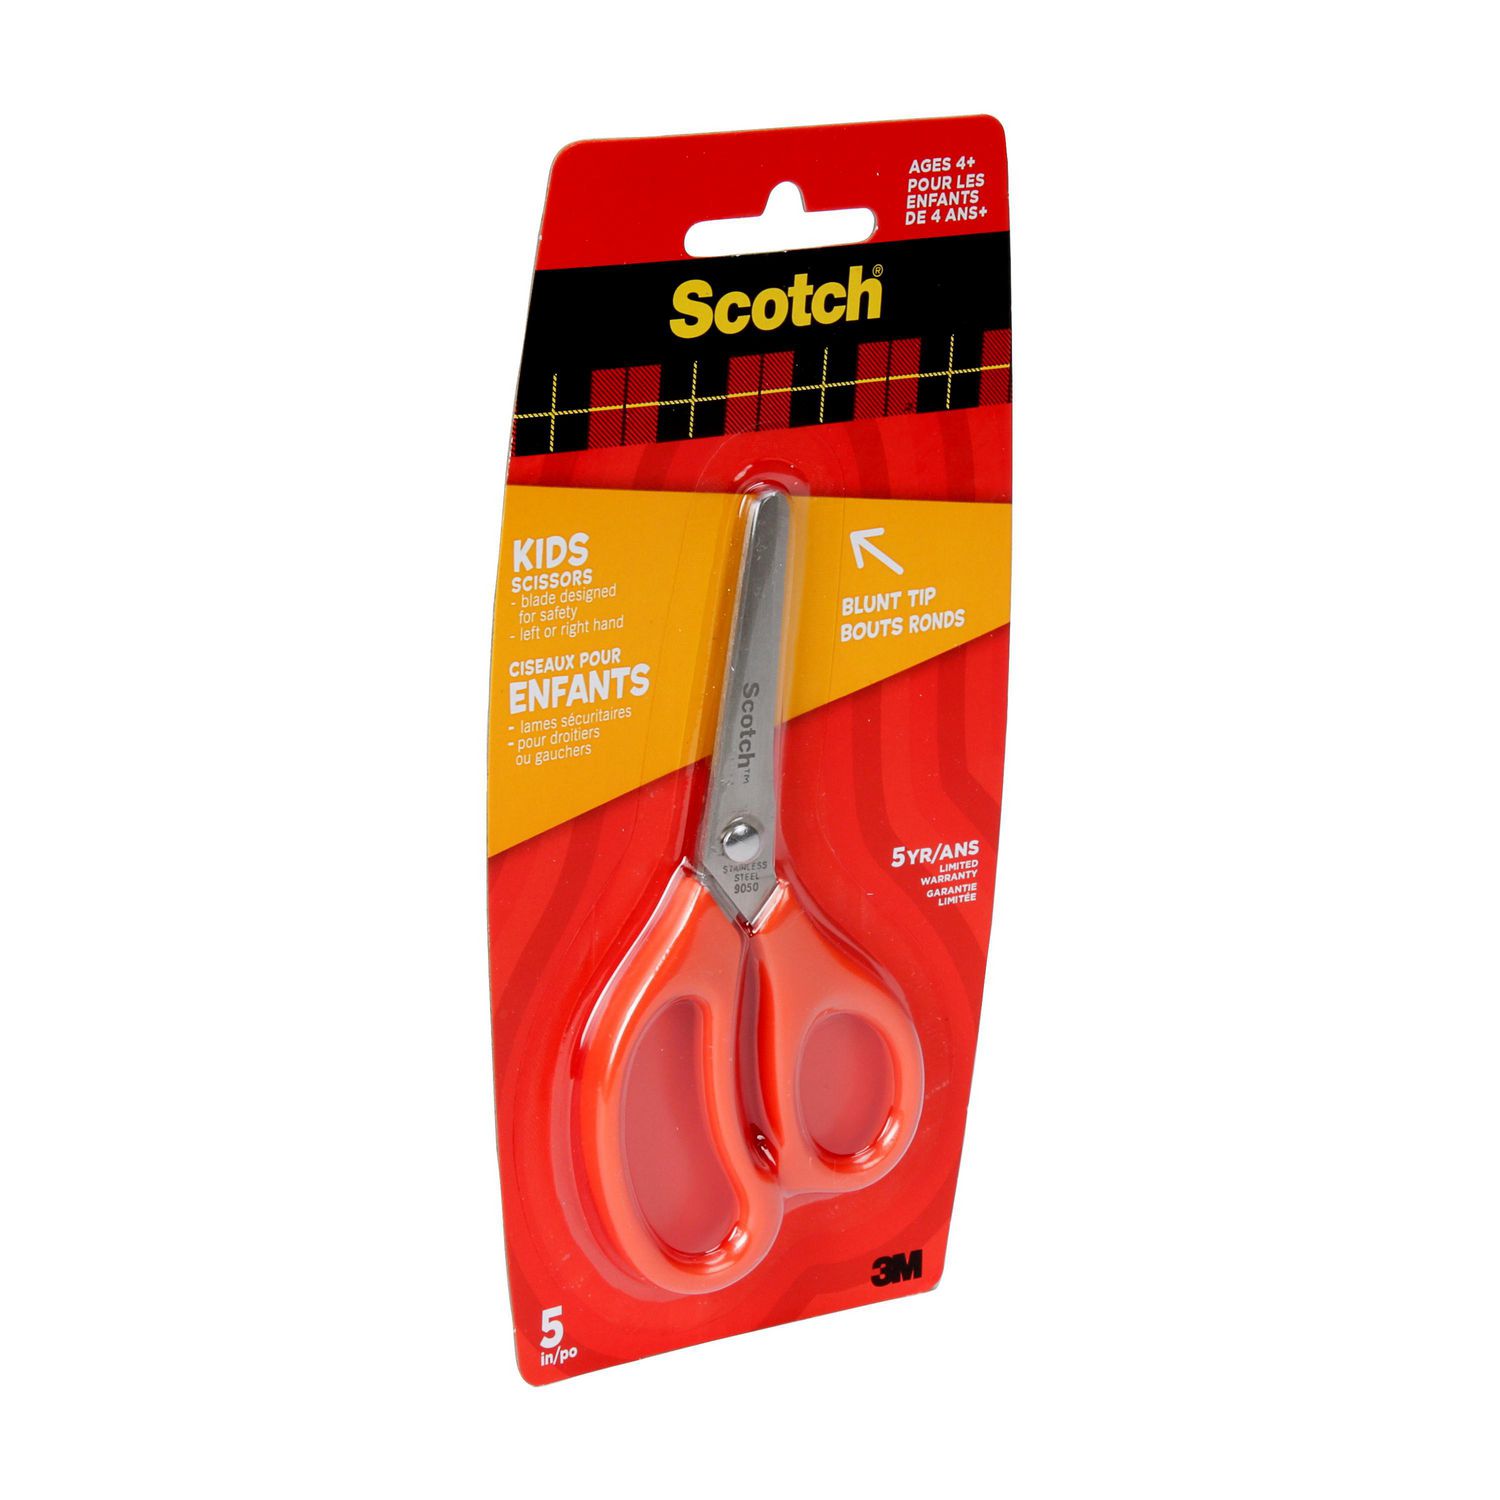 Scotch™ Kids Scissors